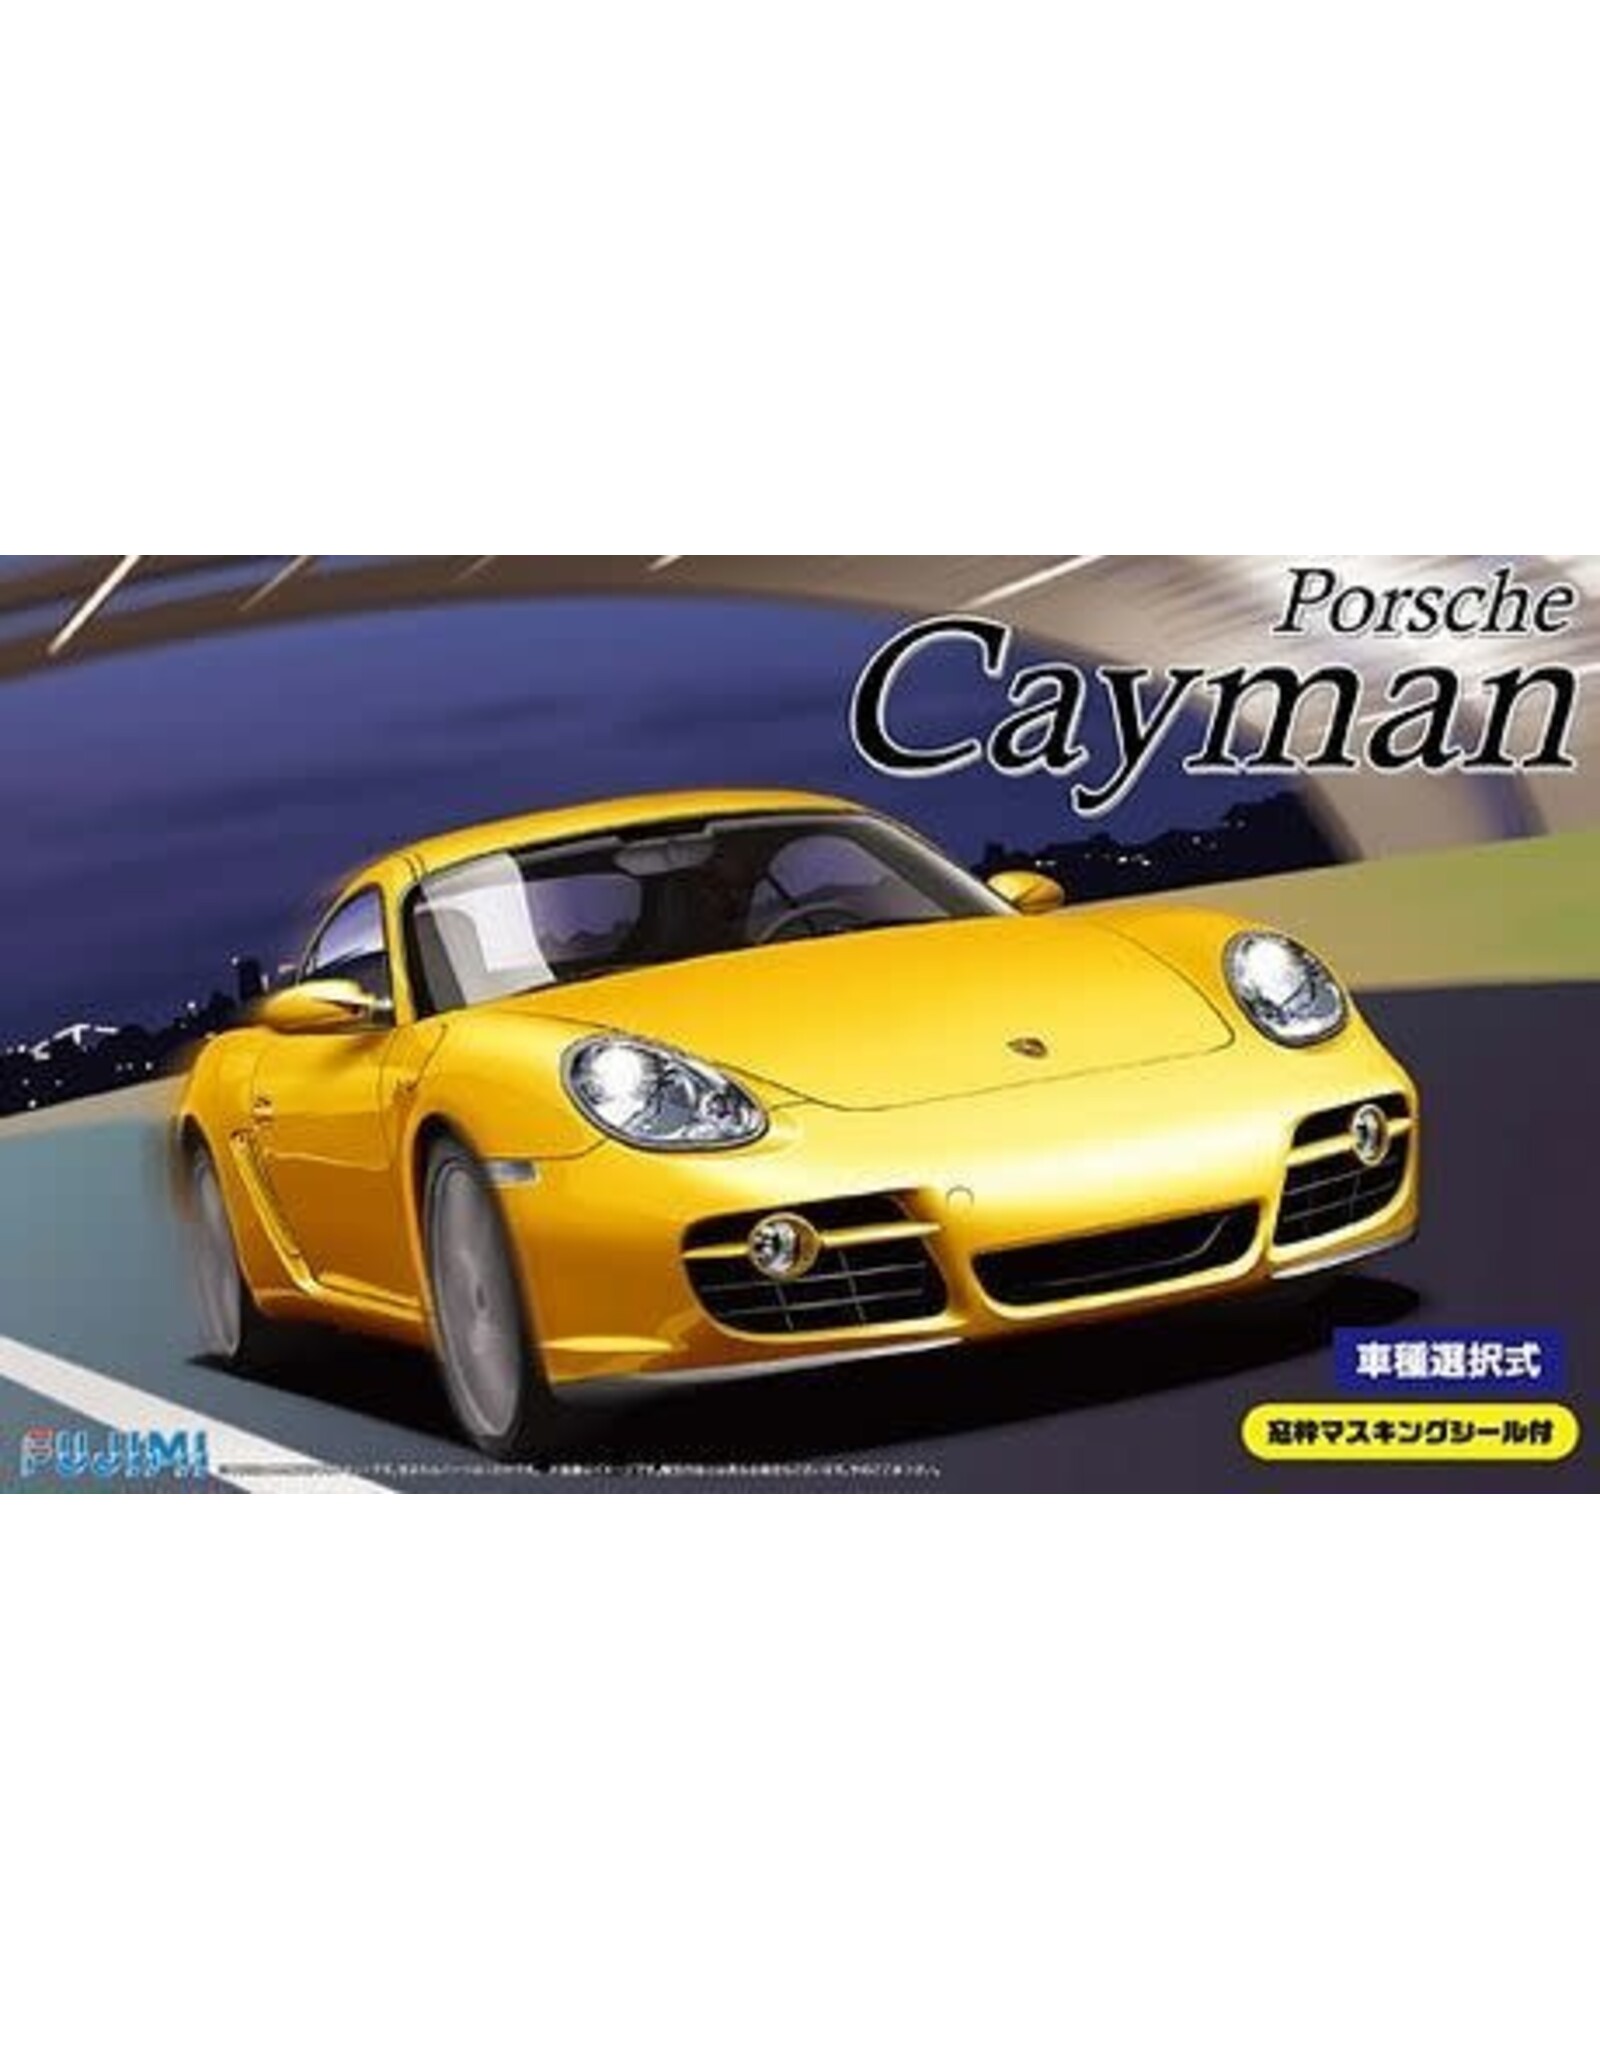 Fujimi 1/24 Porsche Cayman/Cayman S with Window Frame Masking Seal